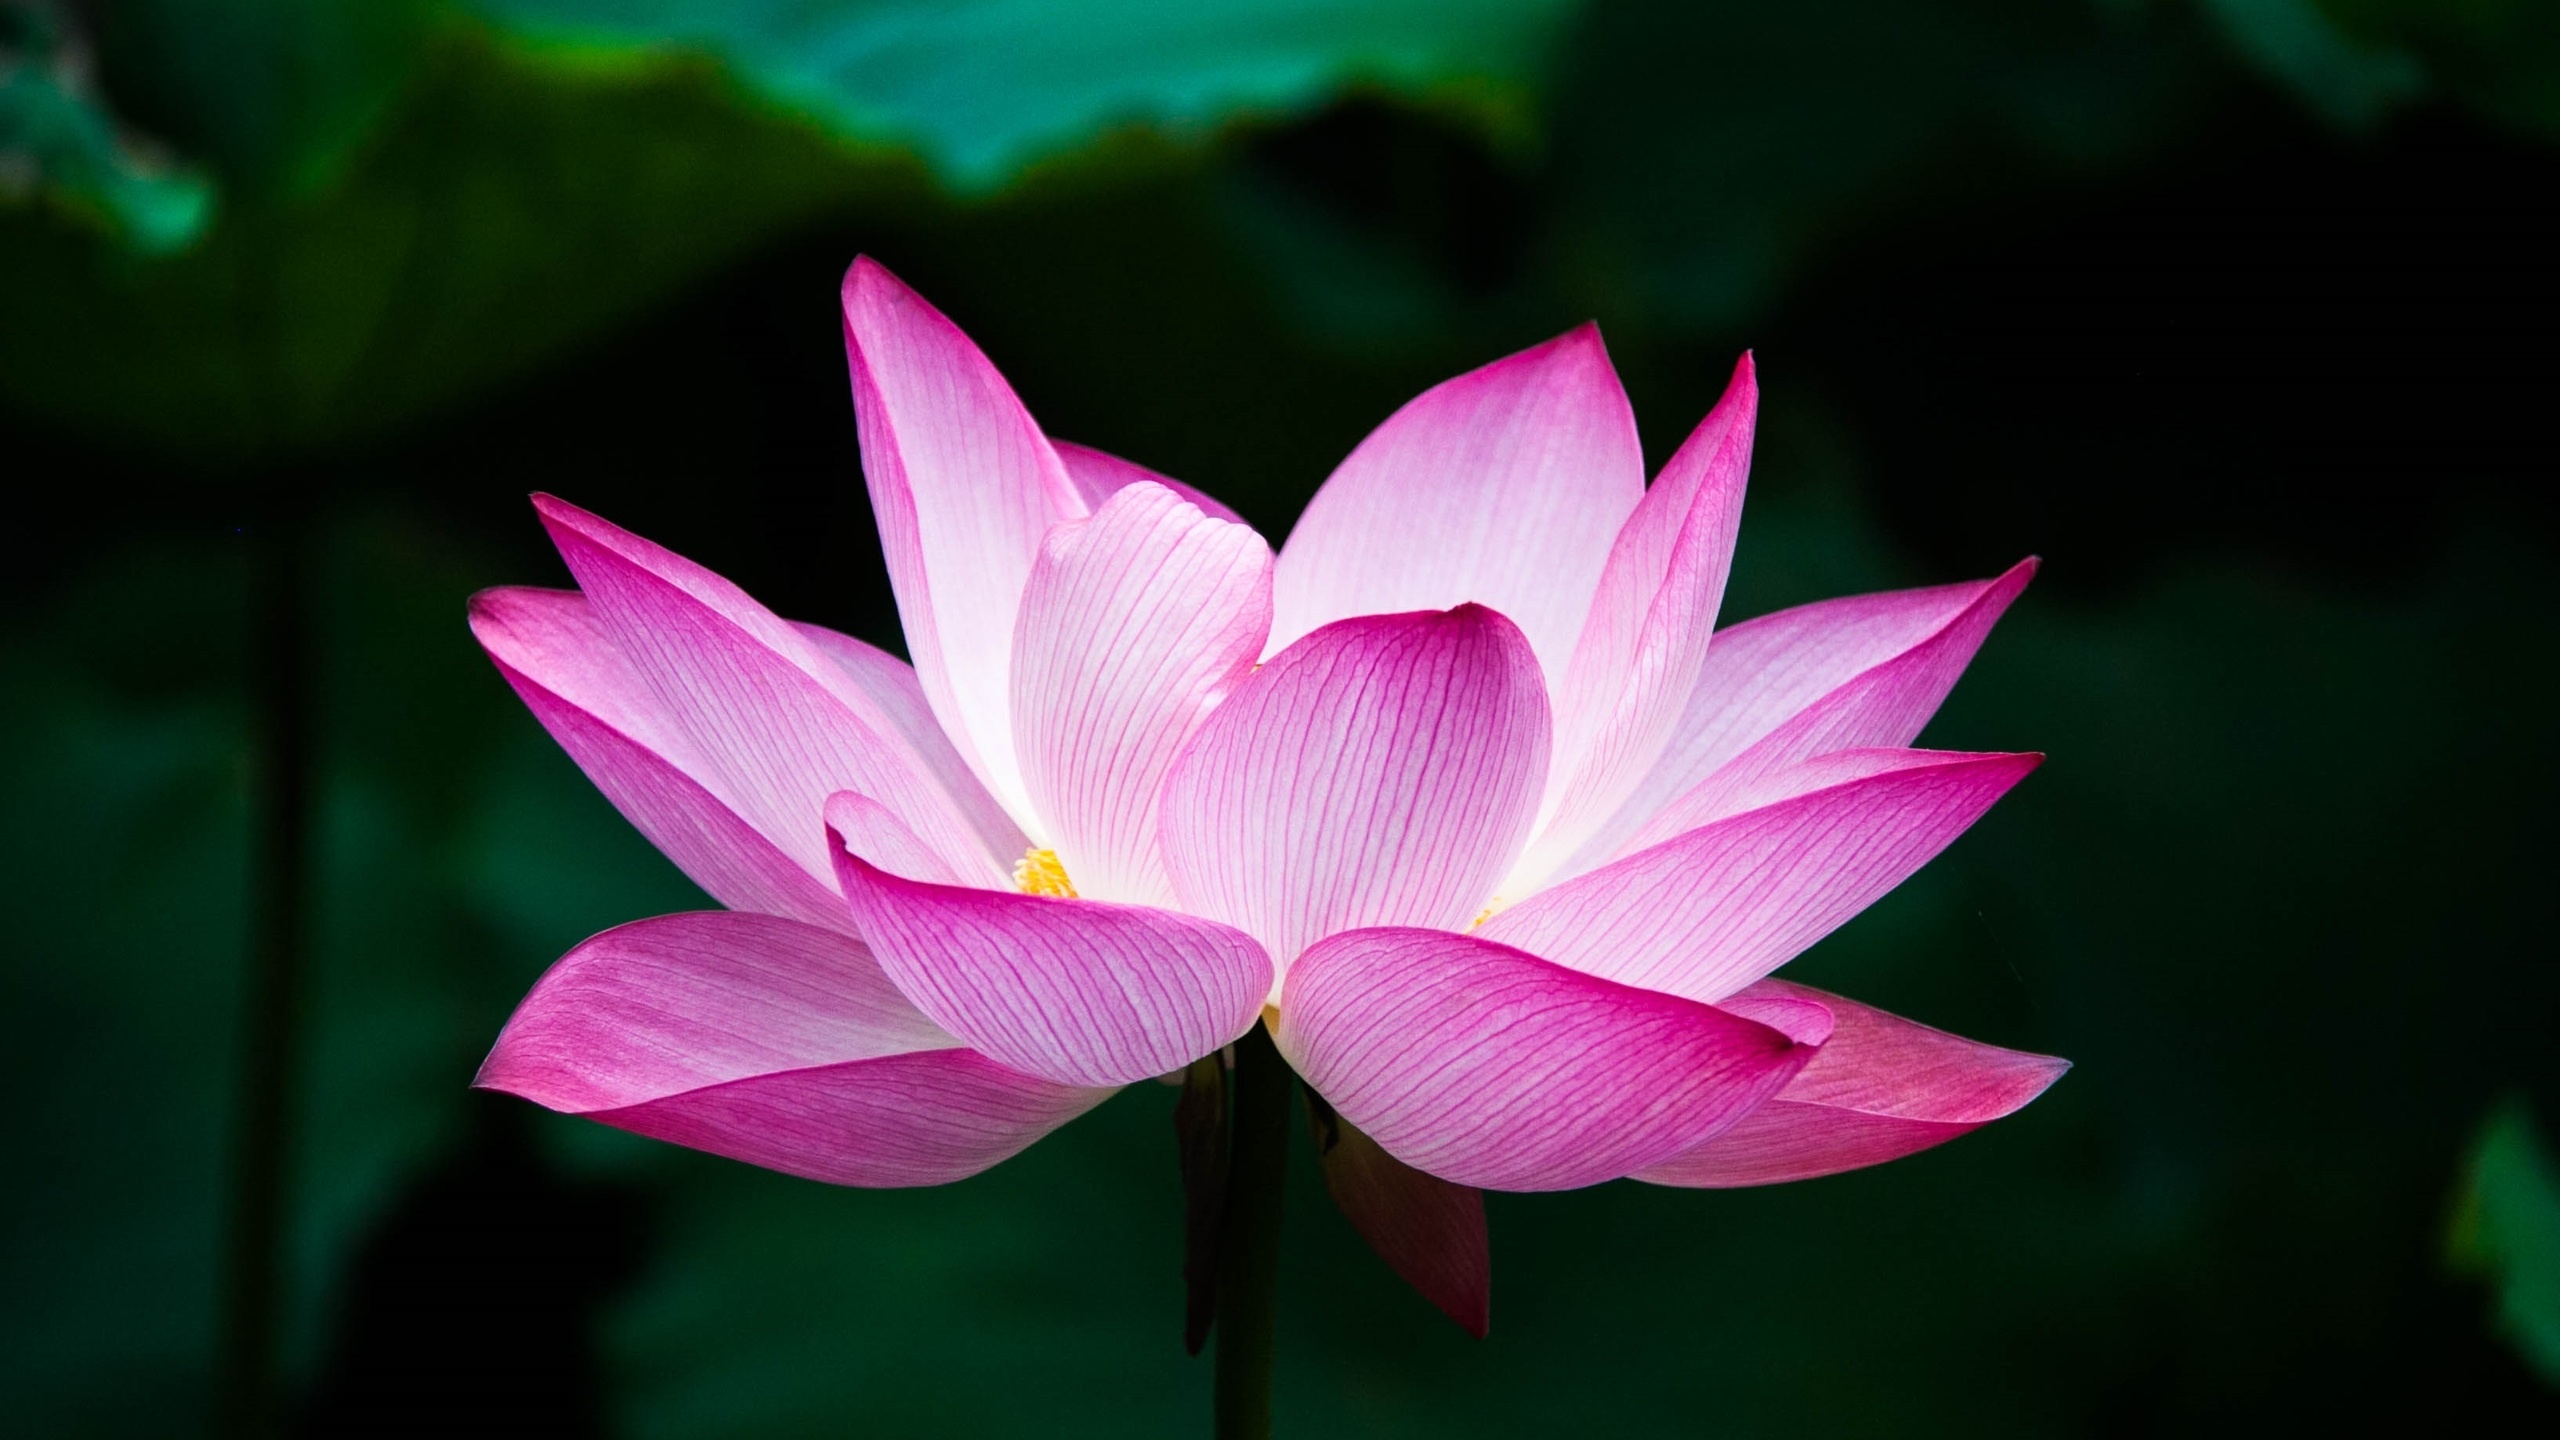 Lotus flower 4K, High-resolution wallpapers, Stunning visuals, Aesthetic appeal, 2560x1440 HD Desktop